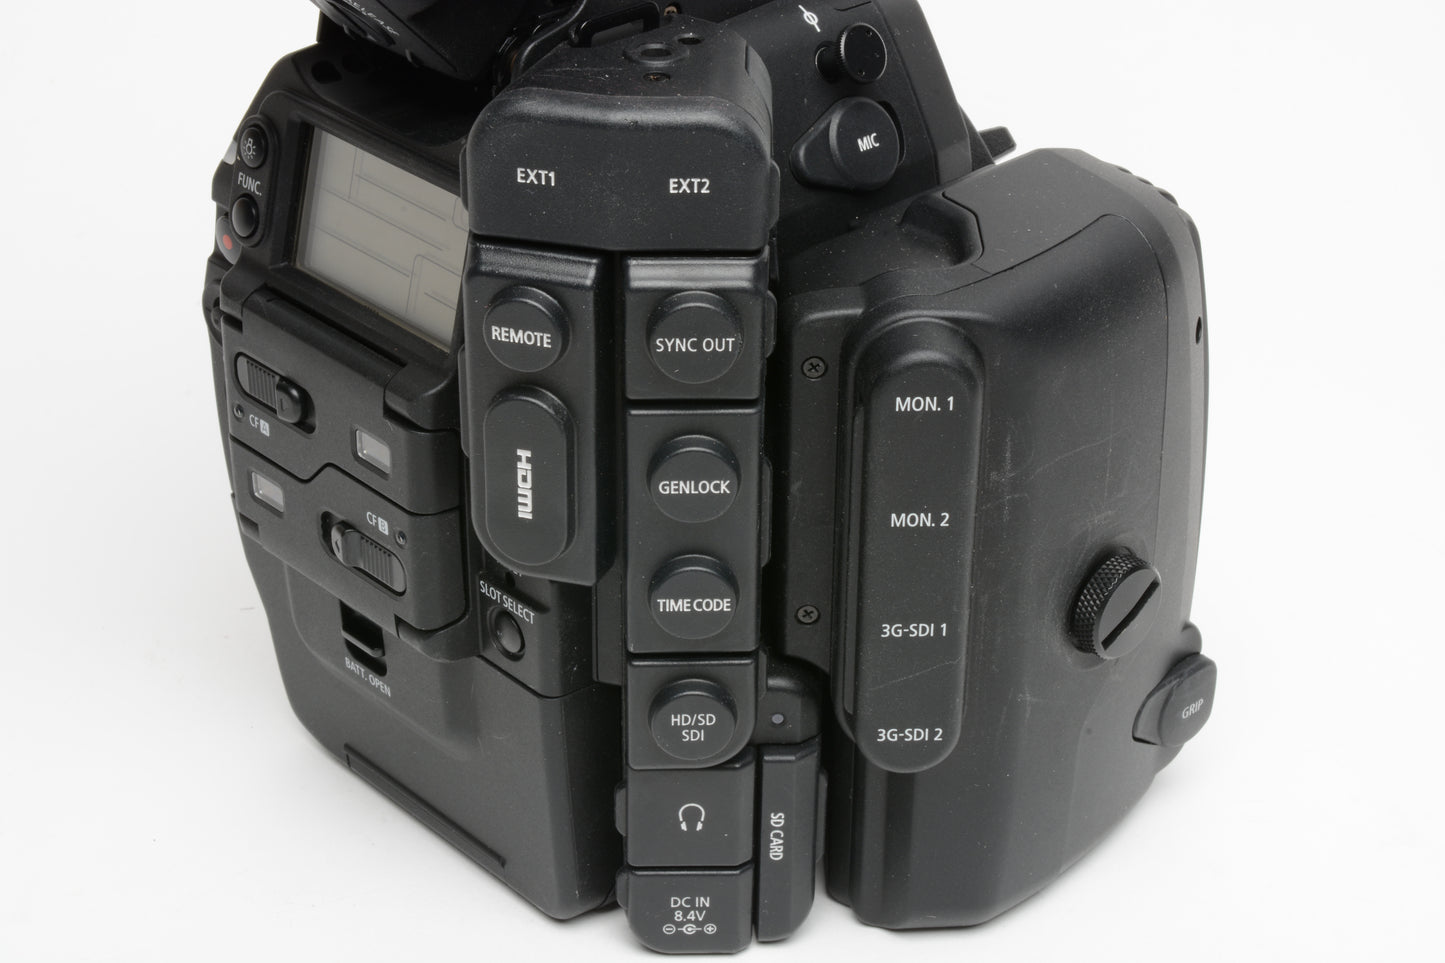 Canon EOS C500 4K Cinema Camera Full Frame EF Mount, batt+charger+AC+monitor nice!